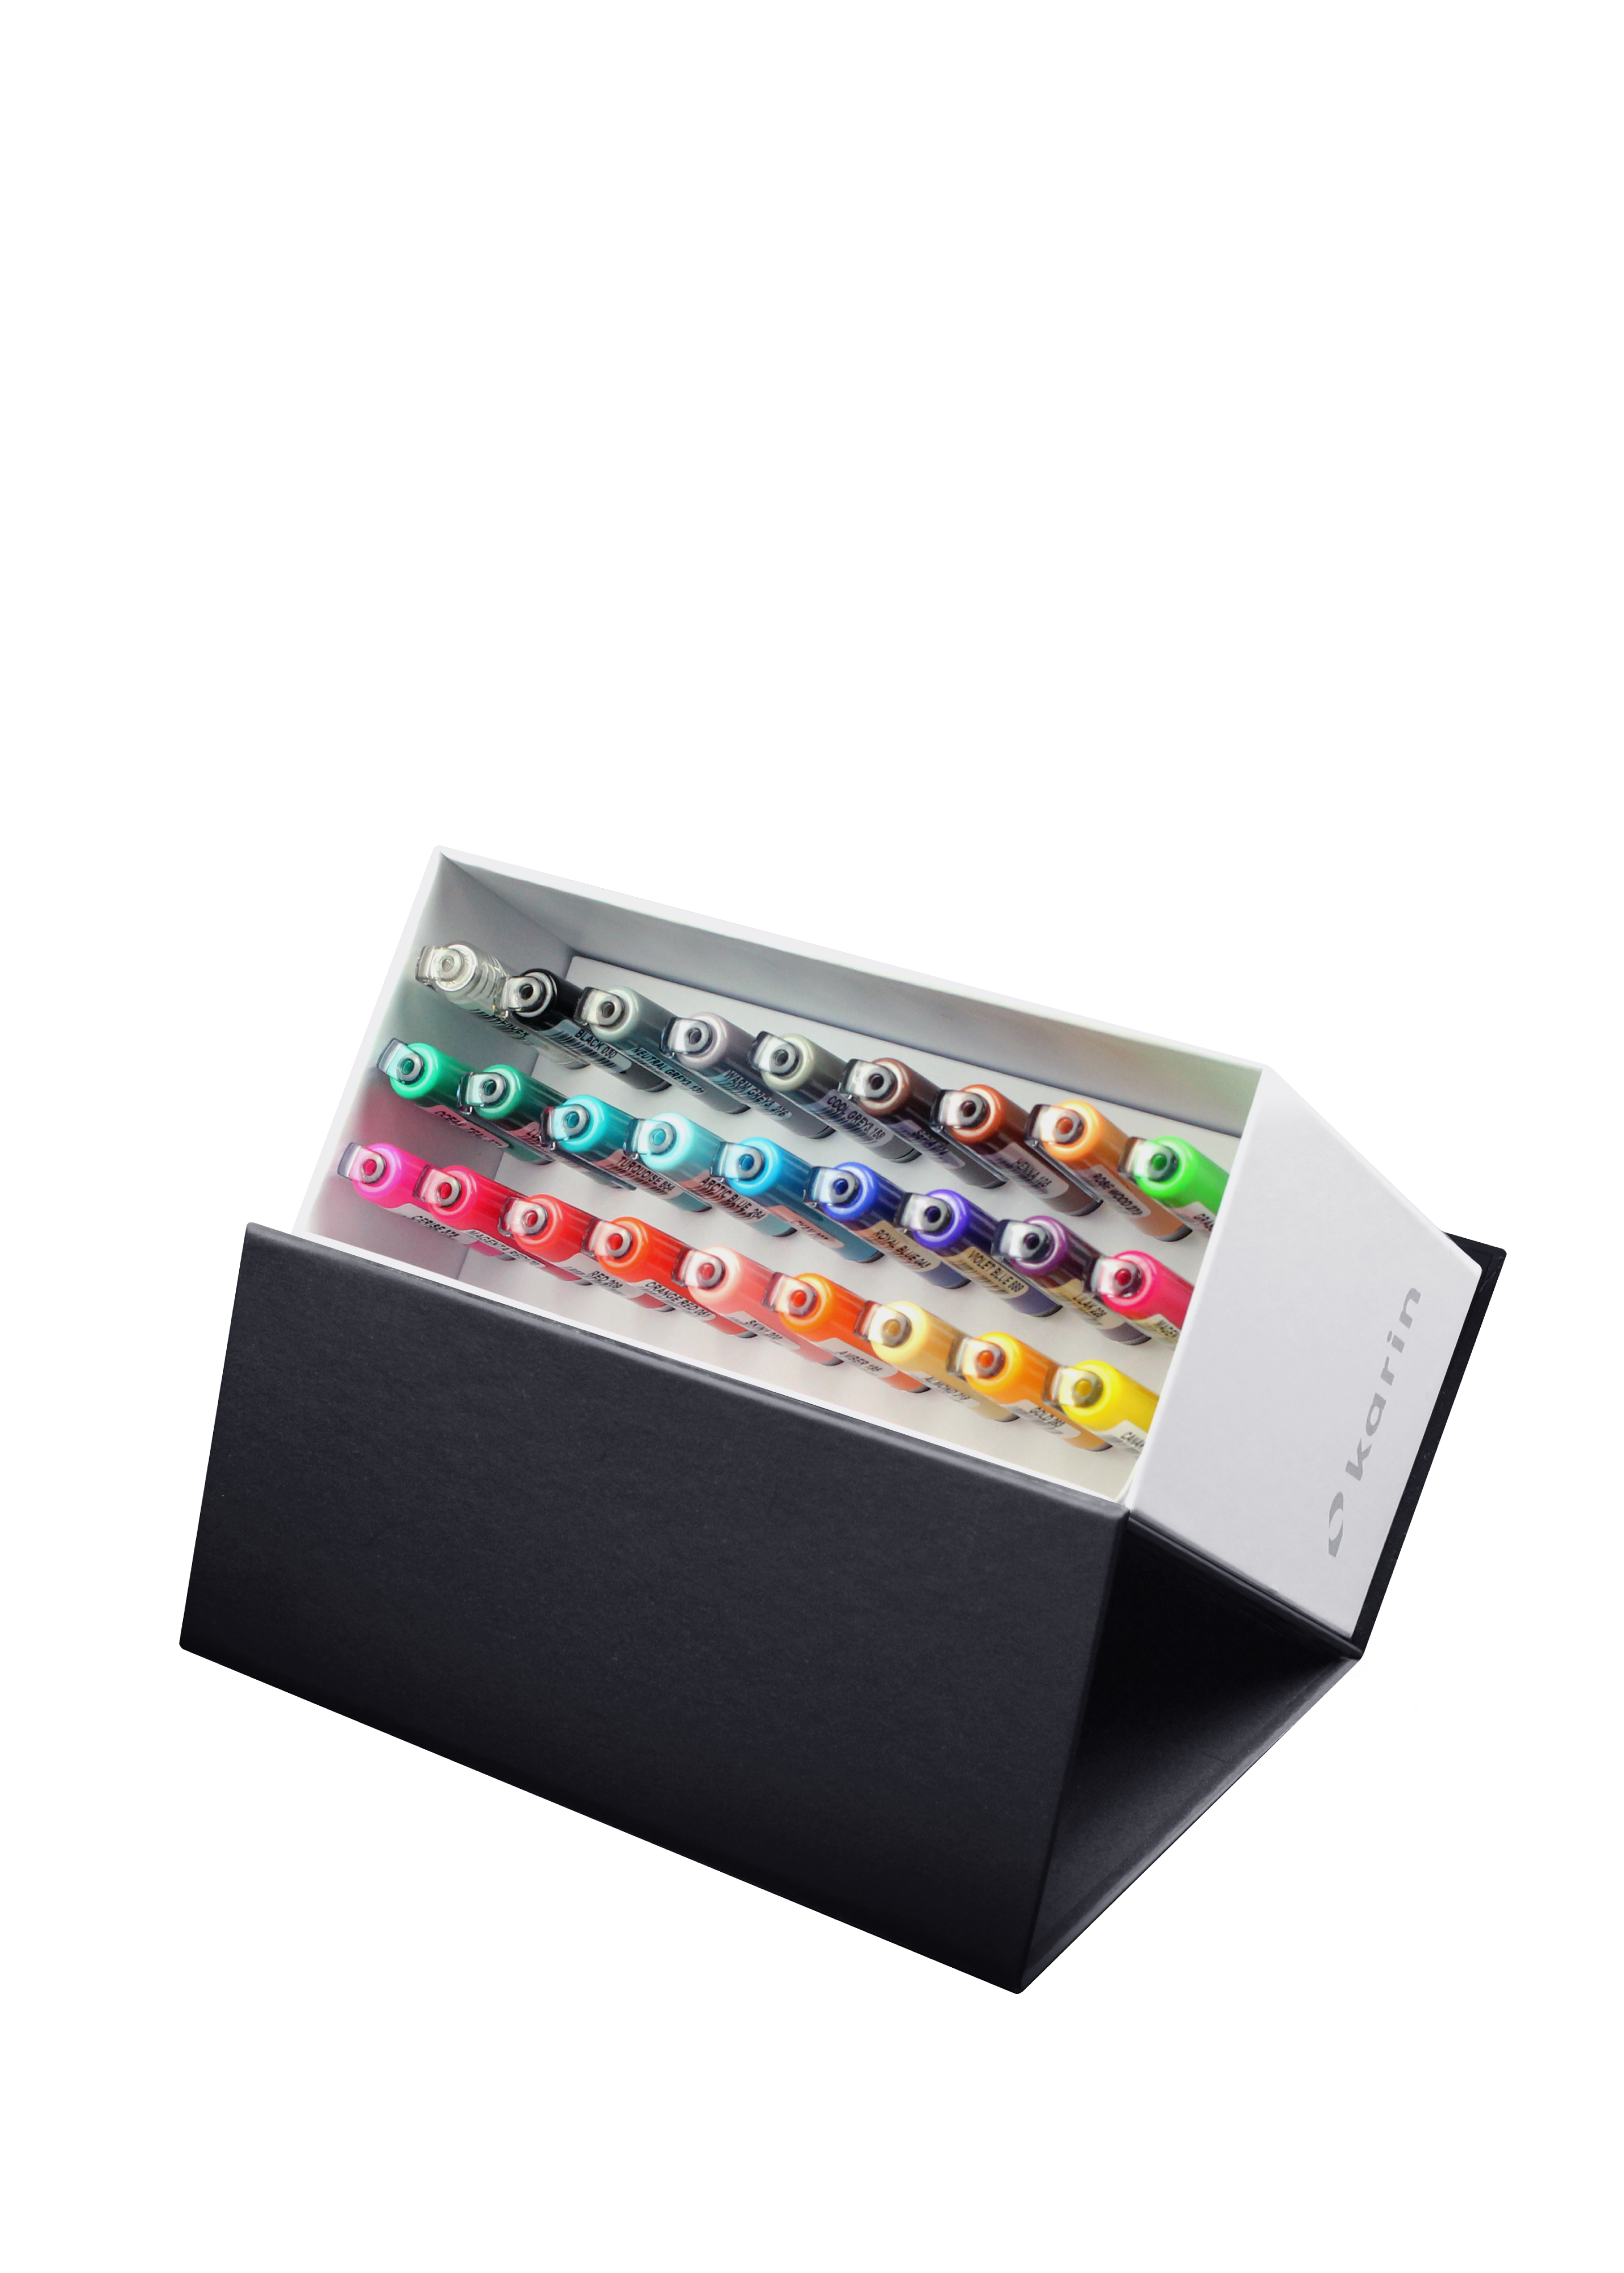 BrushmarkerPRO | MiniBox 26 colours + blender